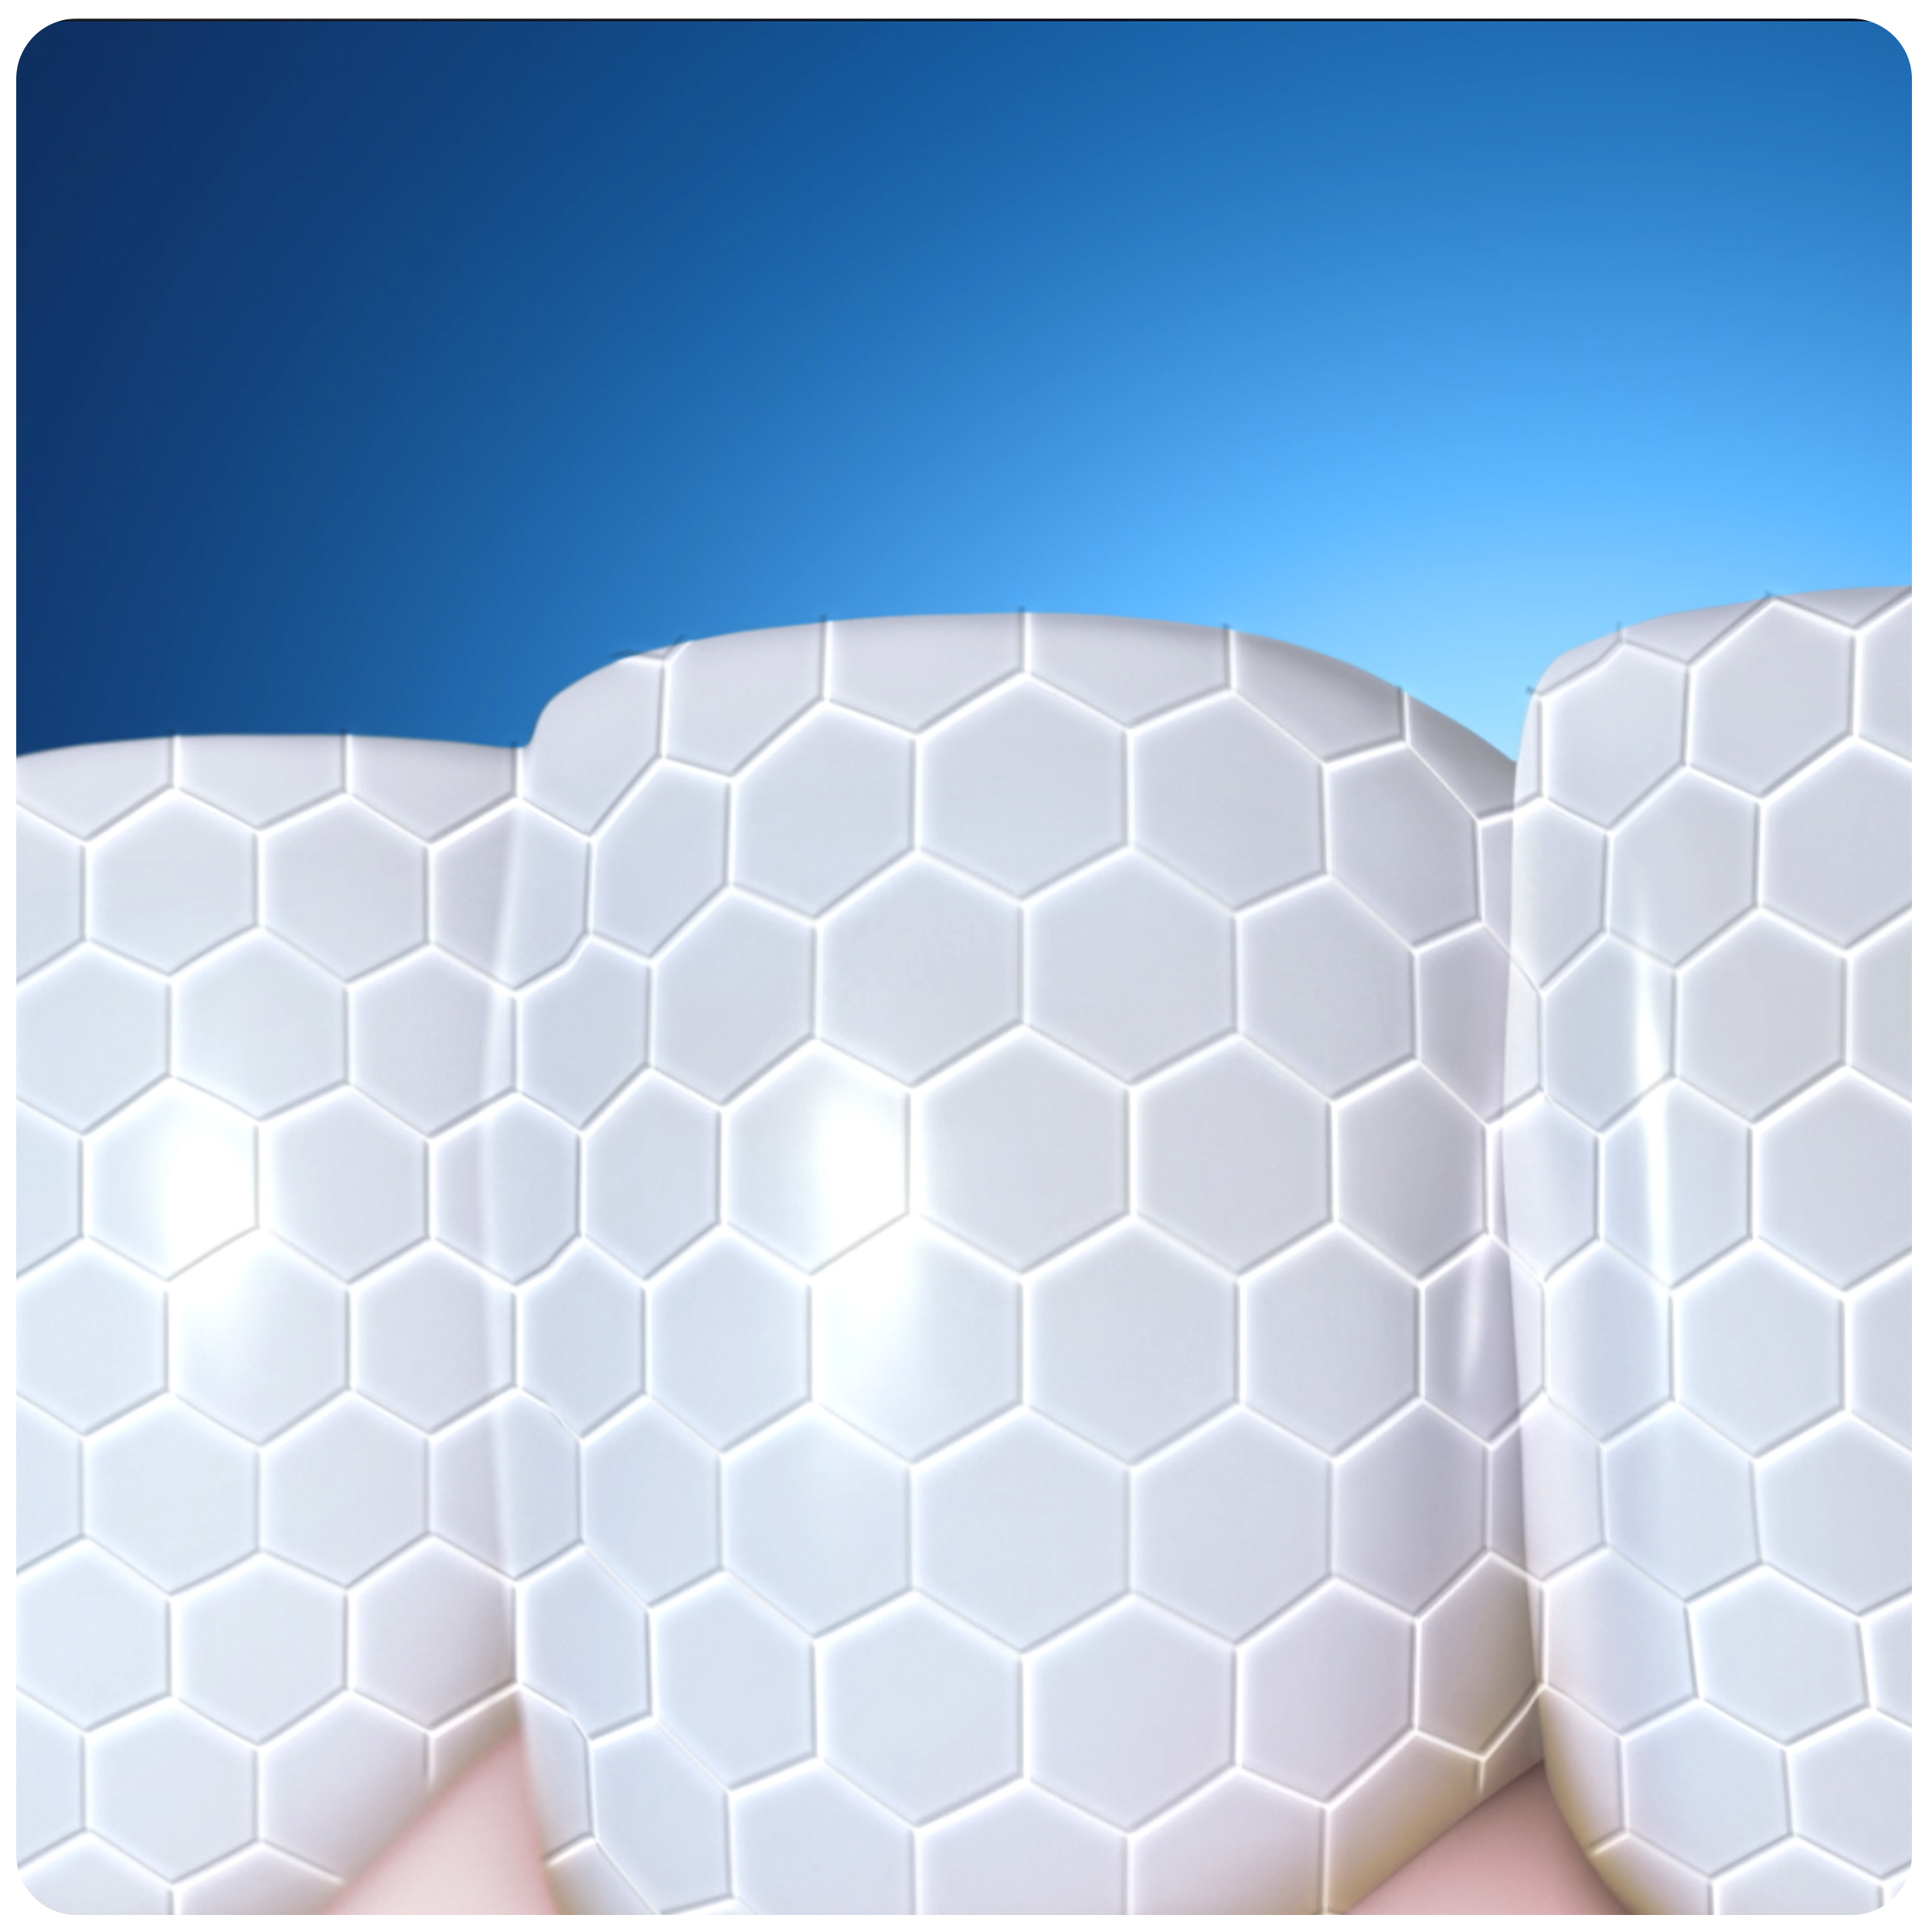 Crest 3D White Whitening Therapy Fluoride Toothpaste, Enamel, 4.1 oz - image 5 of 9